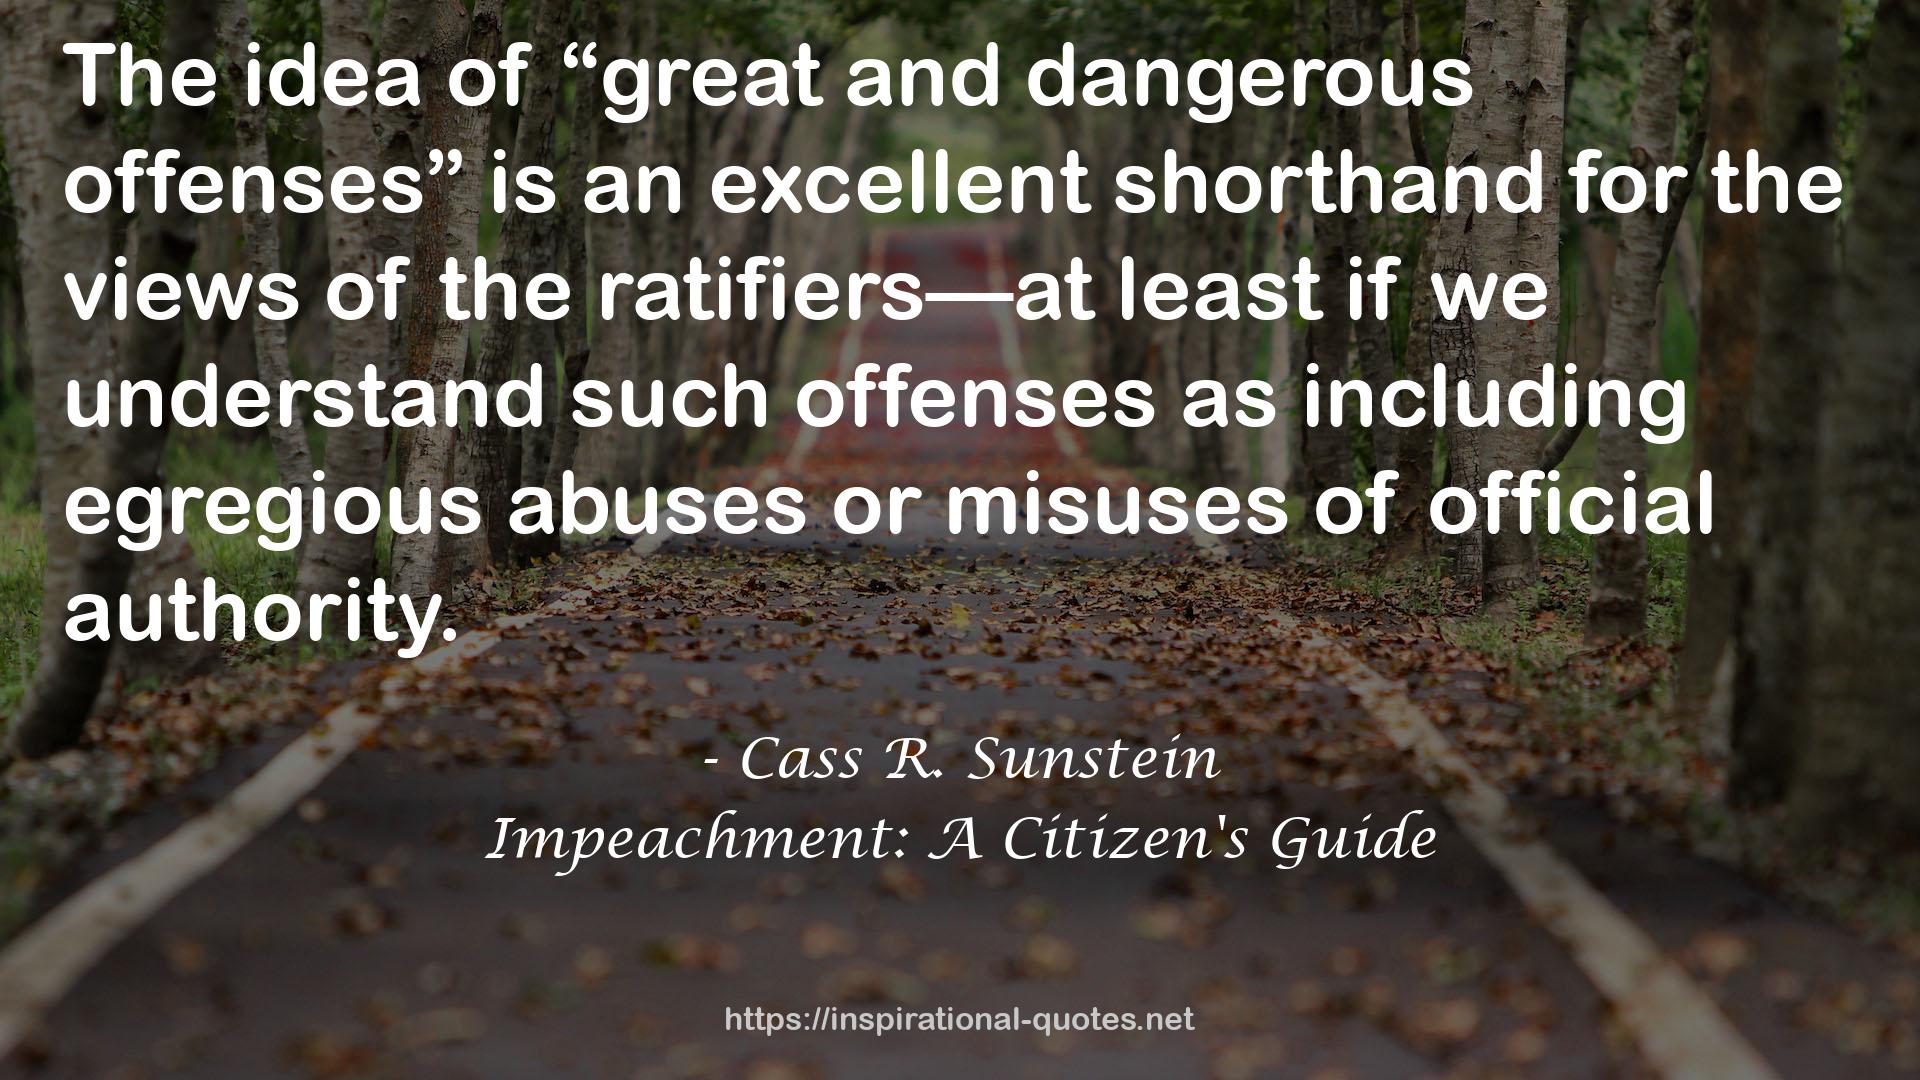 Impeachment: A Citizen's Guide QUOTES